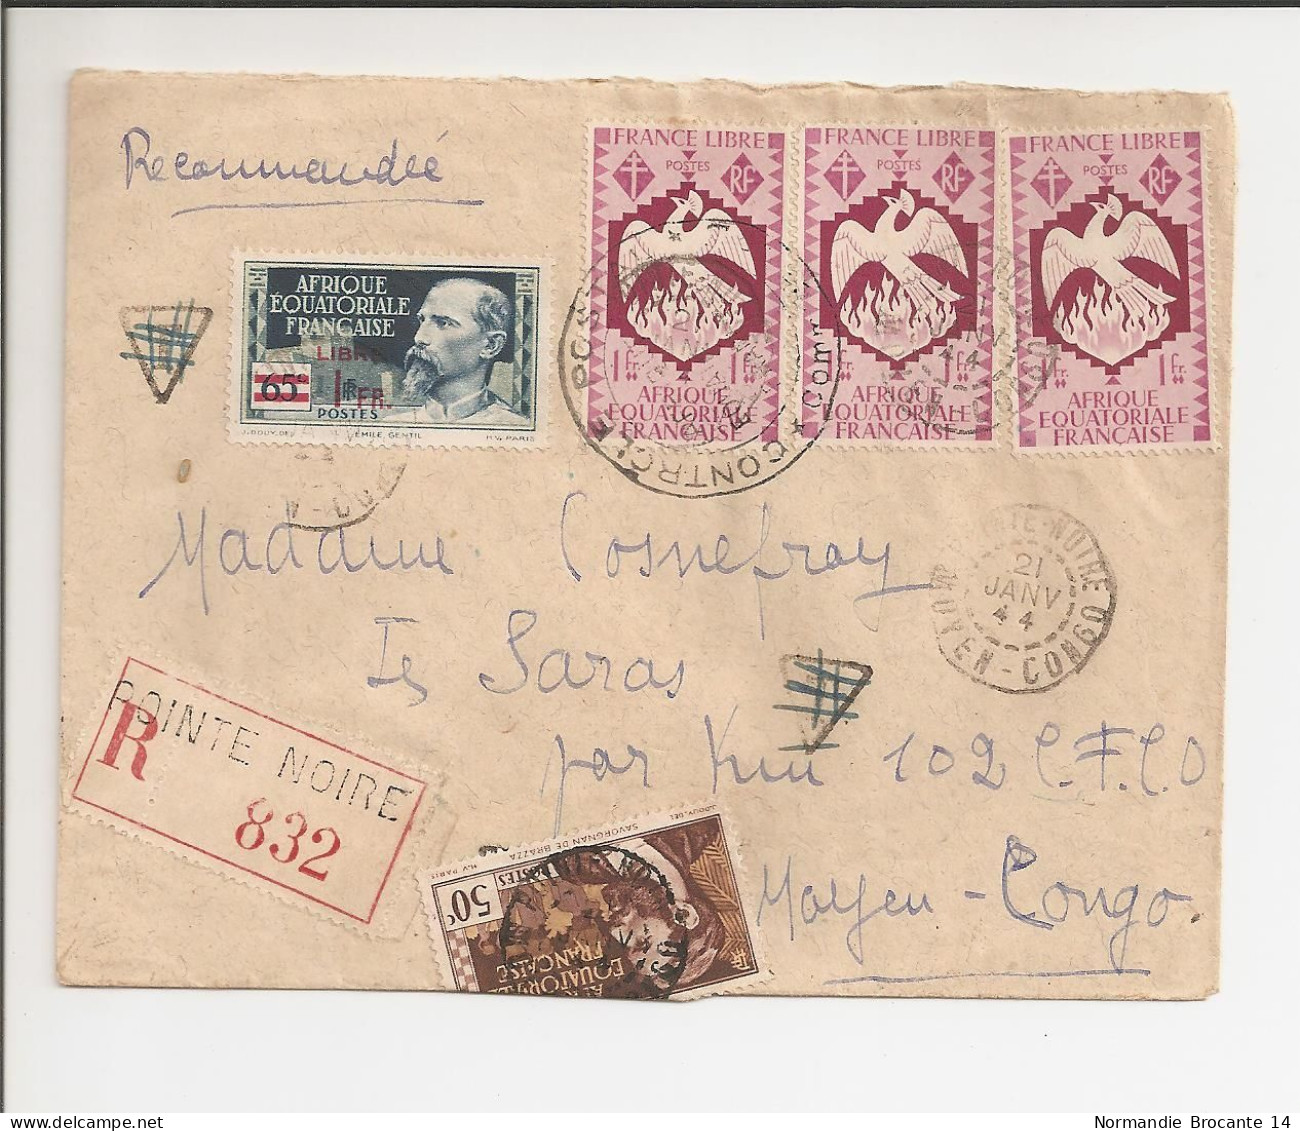 Lettre Recommandée AEF (Moyen Congo) Janvier 1944 - Timbre AEF France Libre - Storia Postale